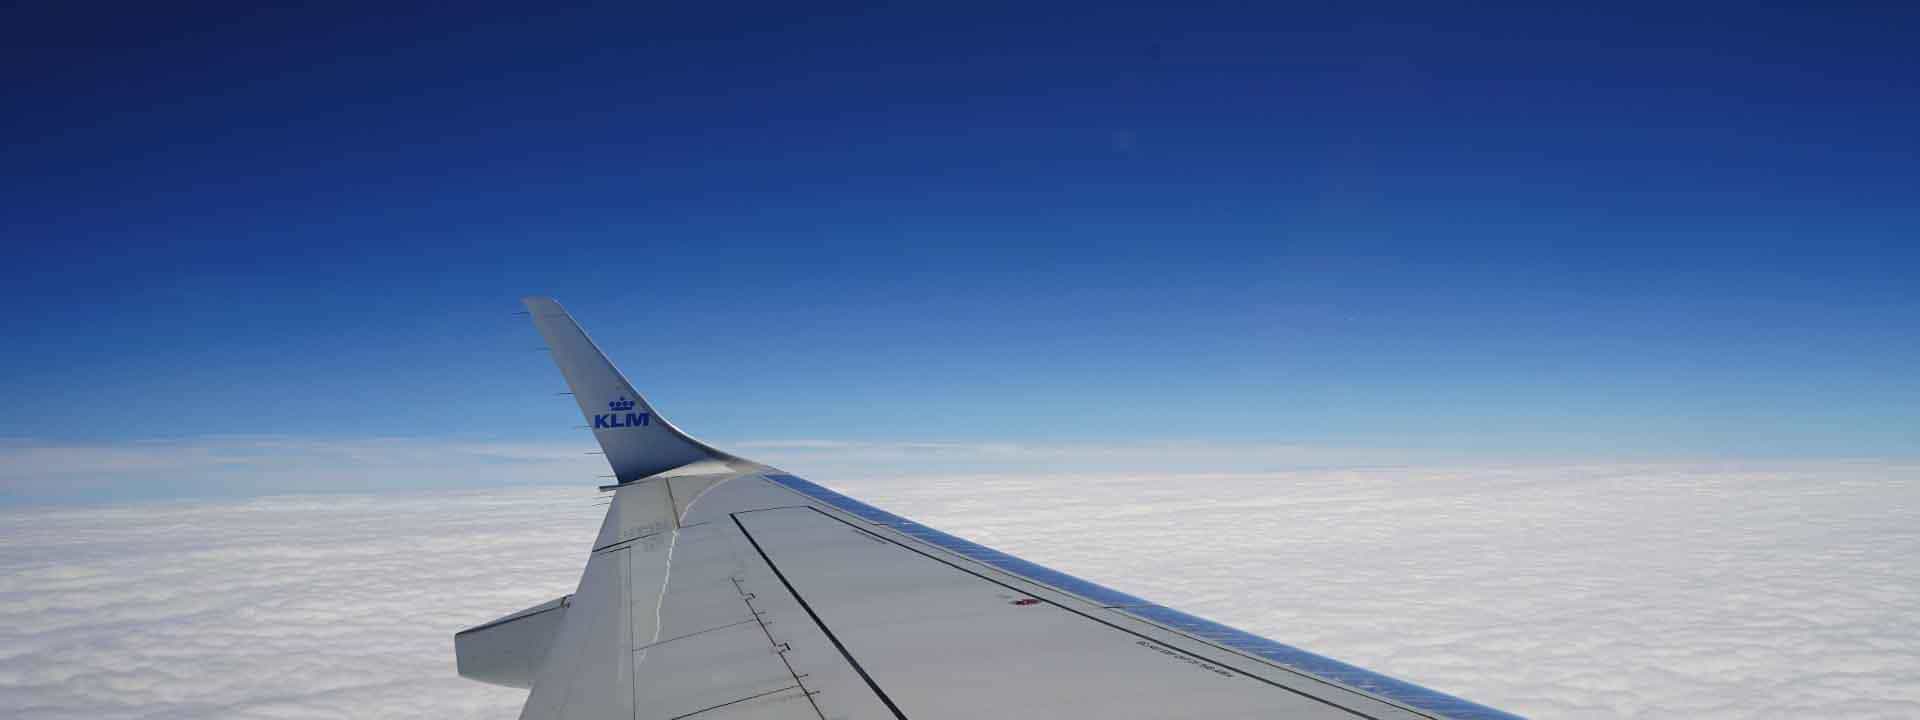 Southampton Amsterdam KLM - Intrepid Escape